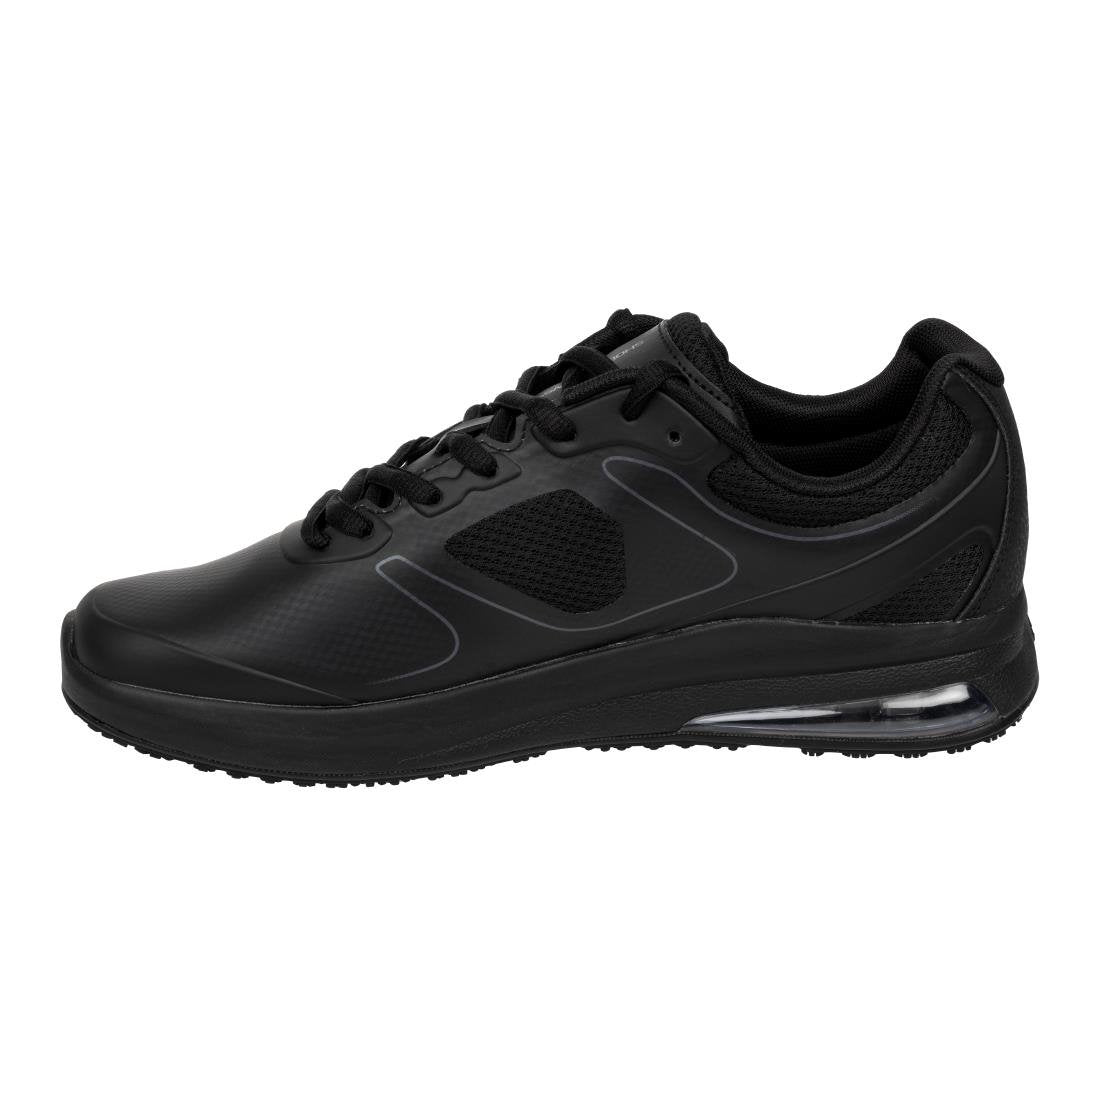 BB586-44 Shoes for Crews Men's Evolution Trainers Black Size 44